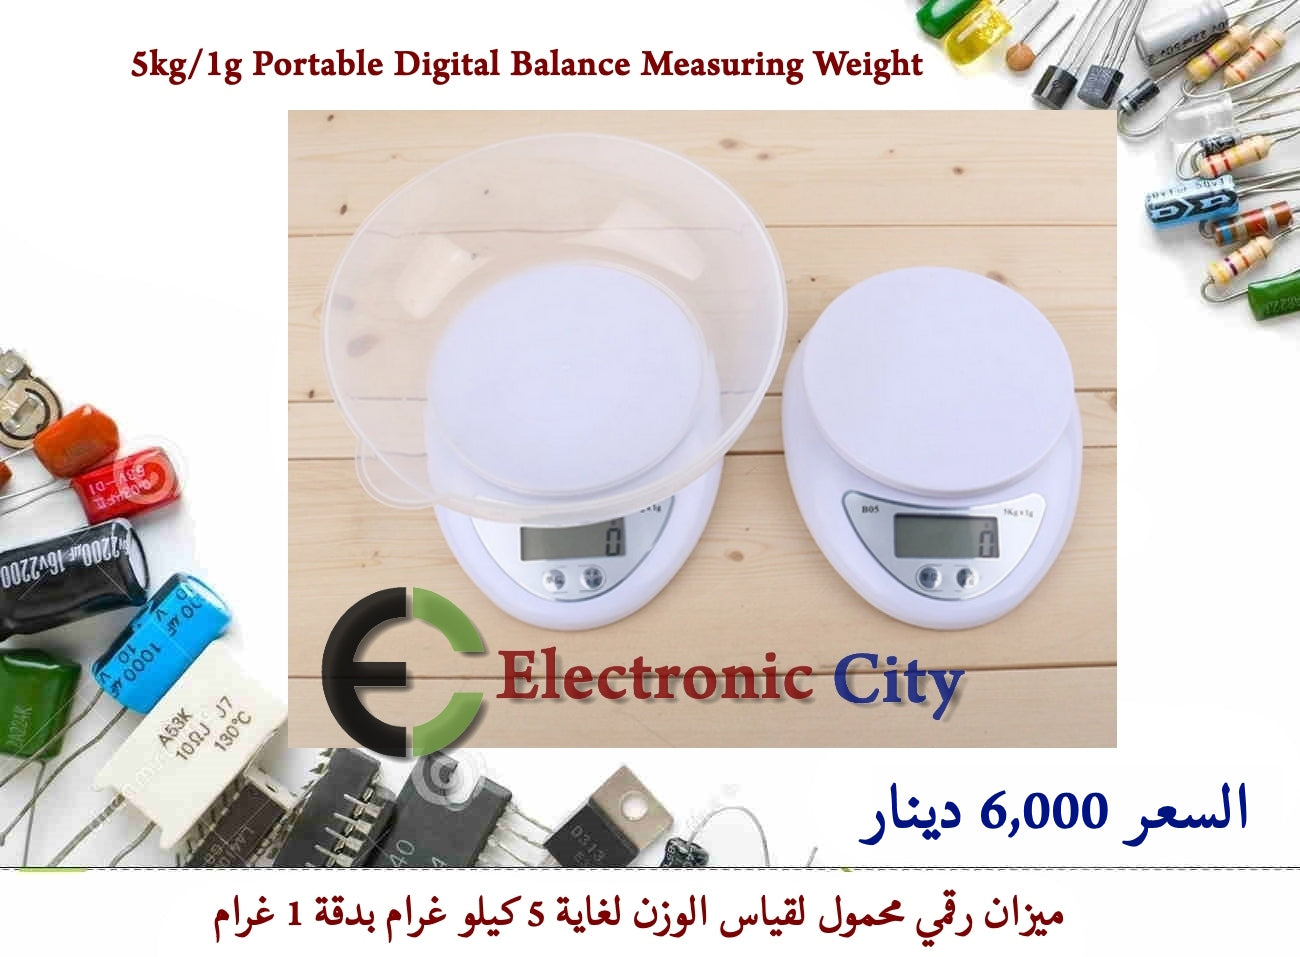 5kg-1g Portable Digital Balance Measuring Weight